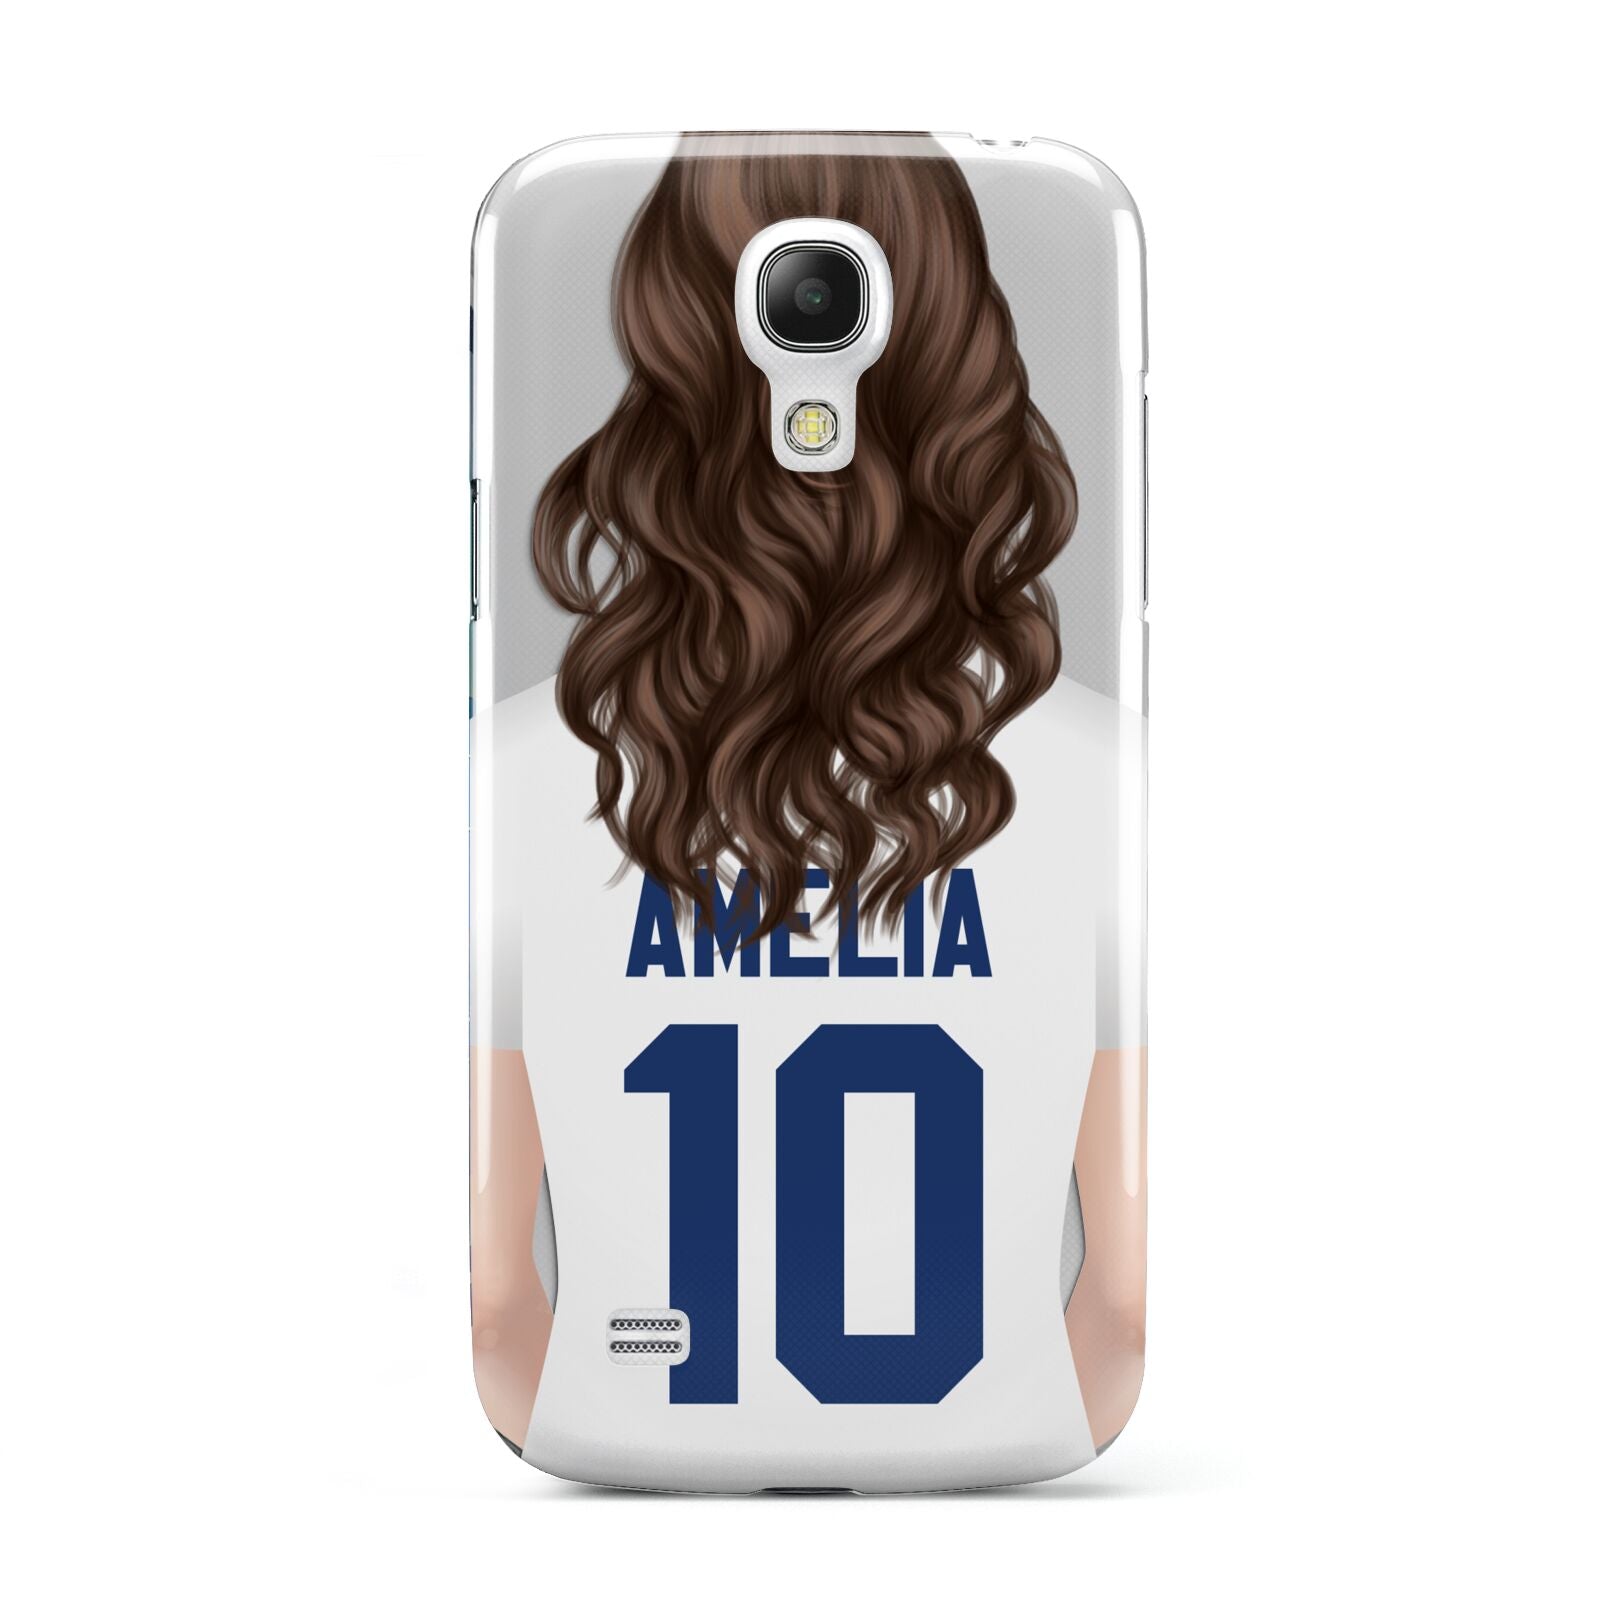 Womens Footballer Personalised Samsung Galaxy S4 Mini Case